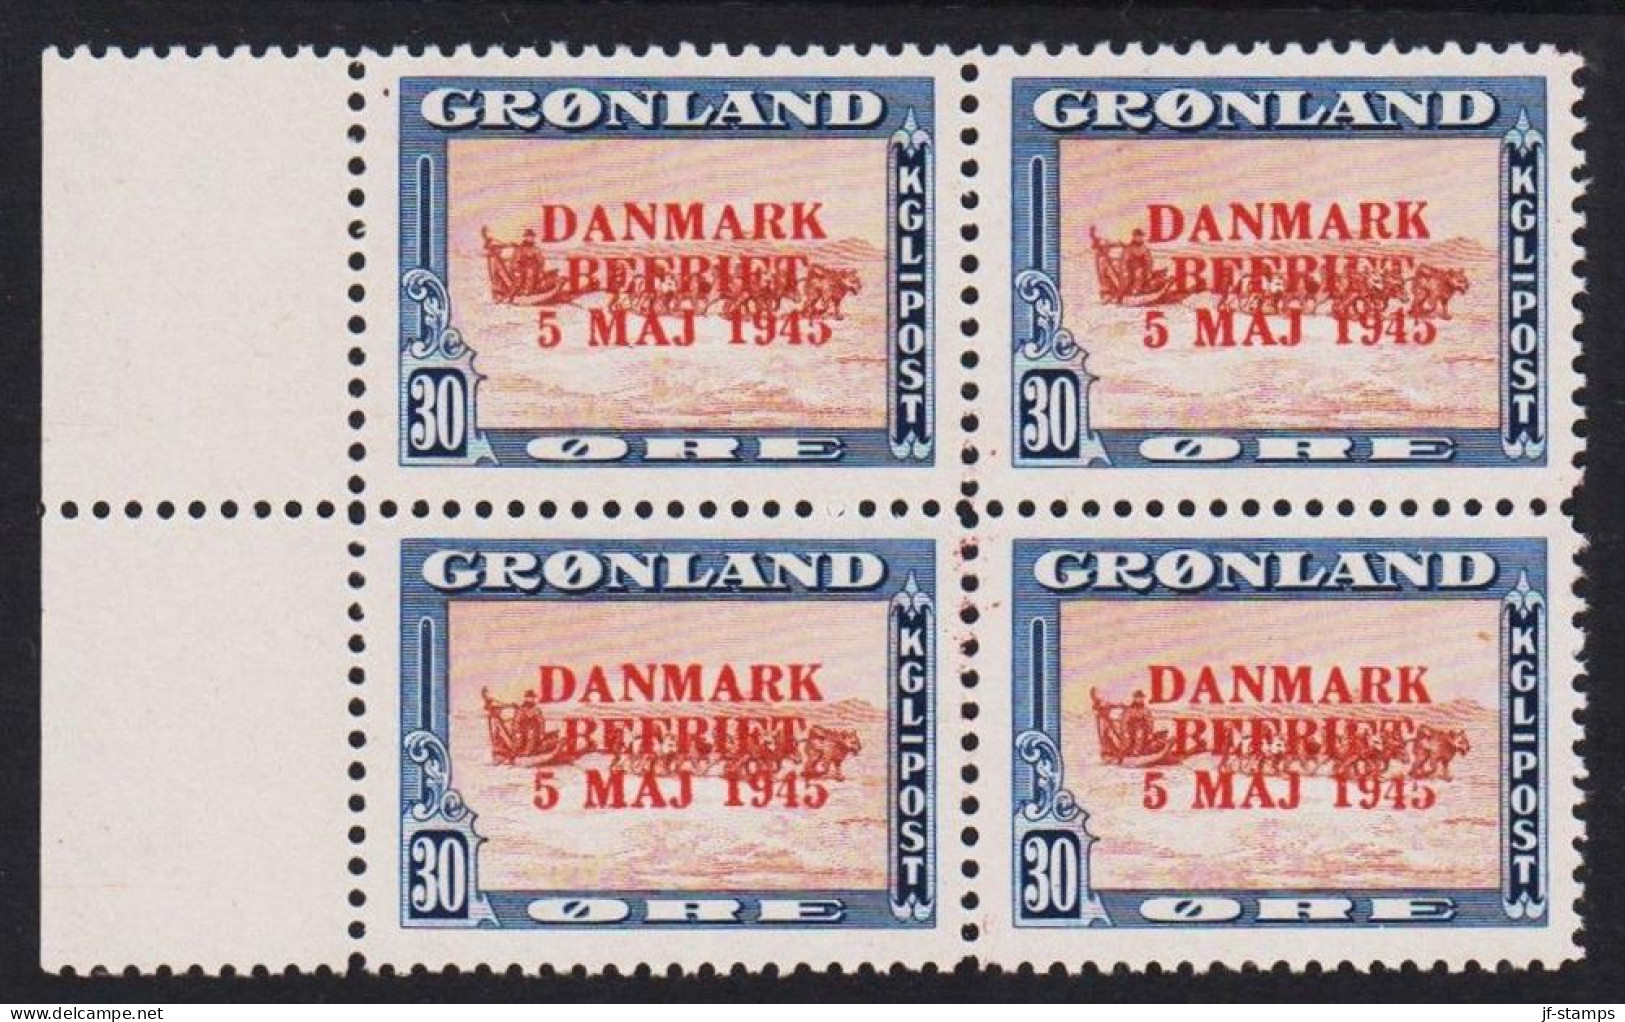 1945. GRØNLAND. DANMARK BEFRIET 5 MAJ 1945 Overprint. 30 Øre Blue/brown/red Dog Sledge. RED ... (Michel 22 I) - JF536979 - Nuovi